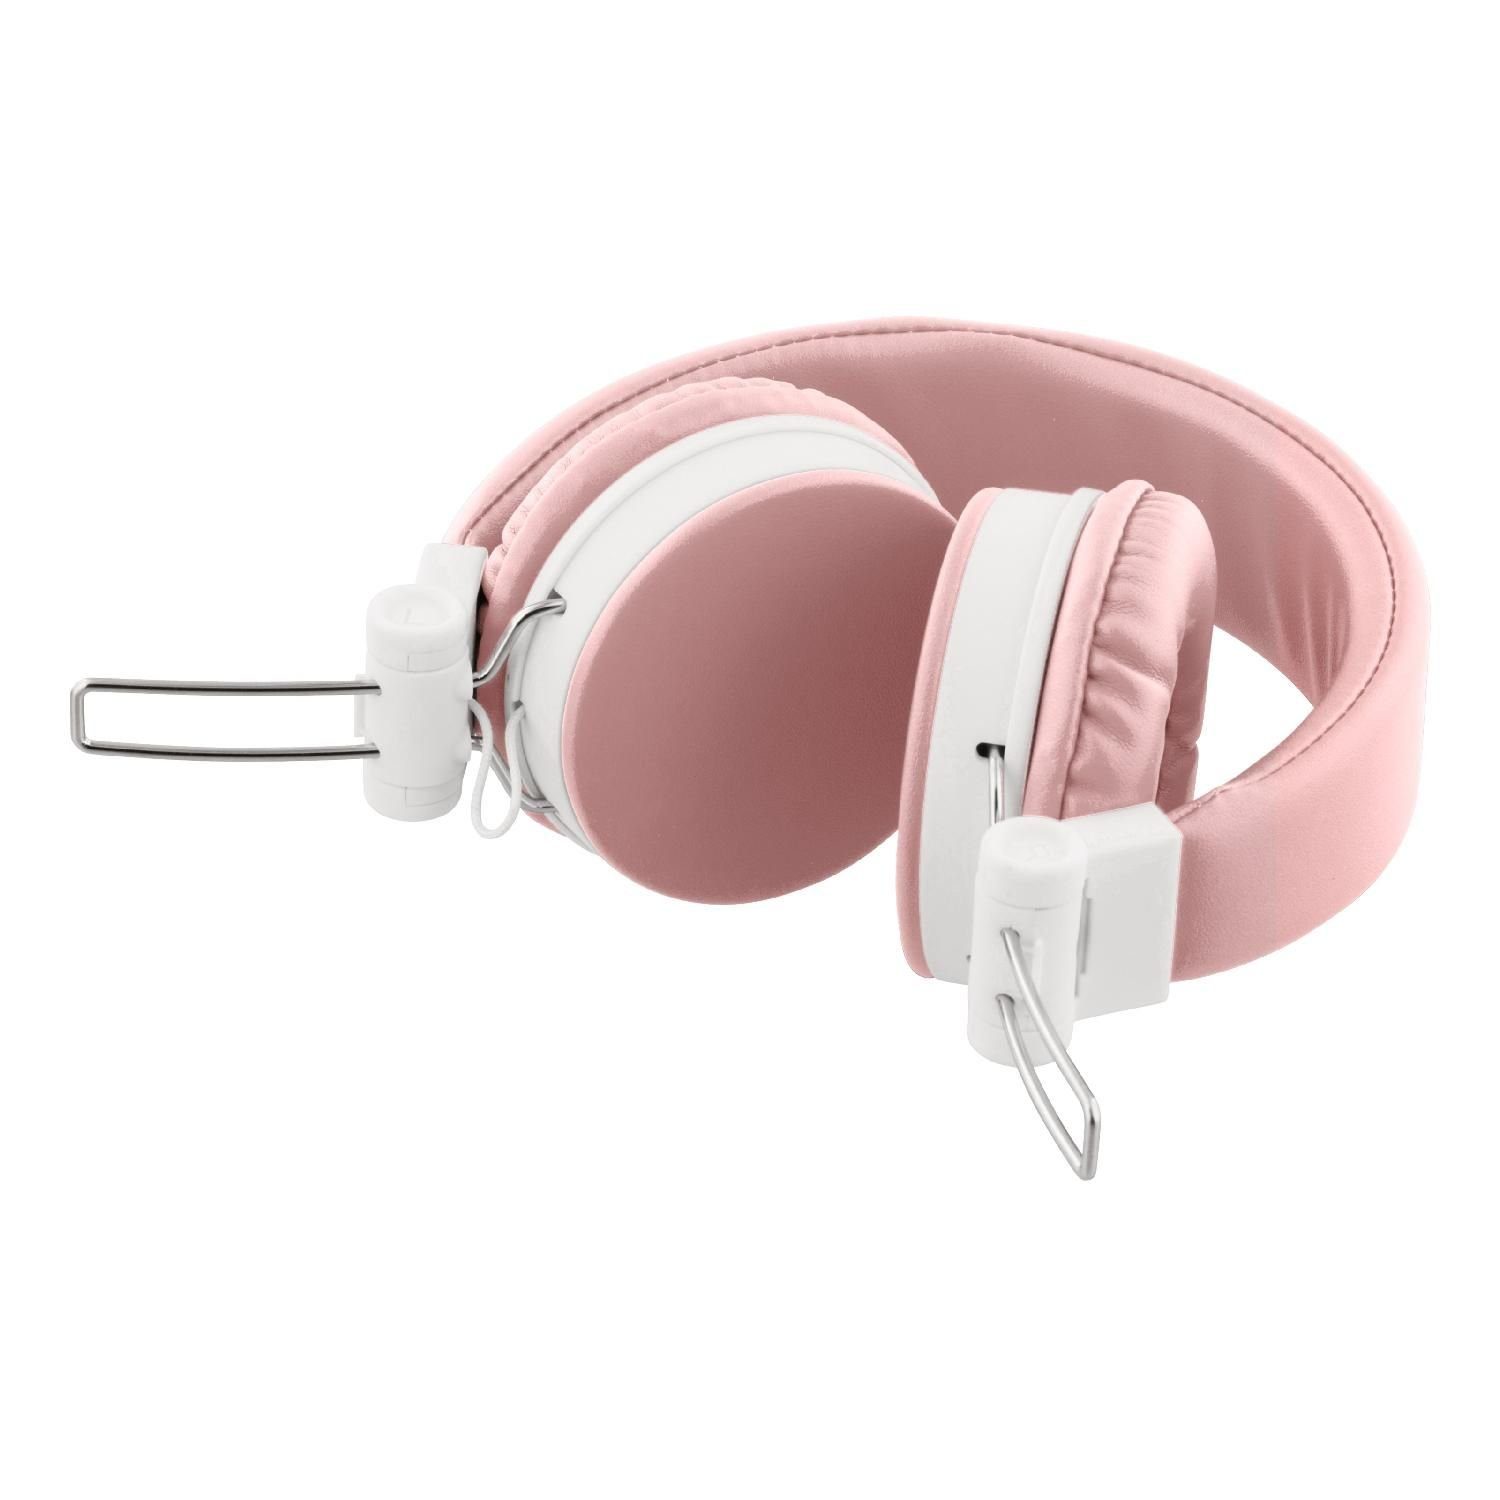 / (integriertes Kopfhörer 3.5mm Ohrpolster rosa, Headset, 1,2m faltbares Kabel Herstellergarantie) Jahre STREETZ inkl. On-Ear-Kopfhörer pink Mikrofon, 5 Klinkenanschluss